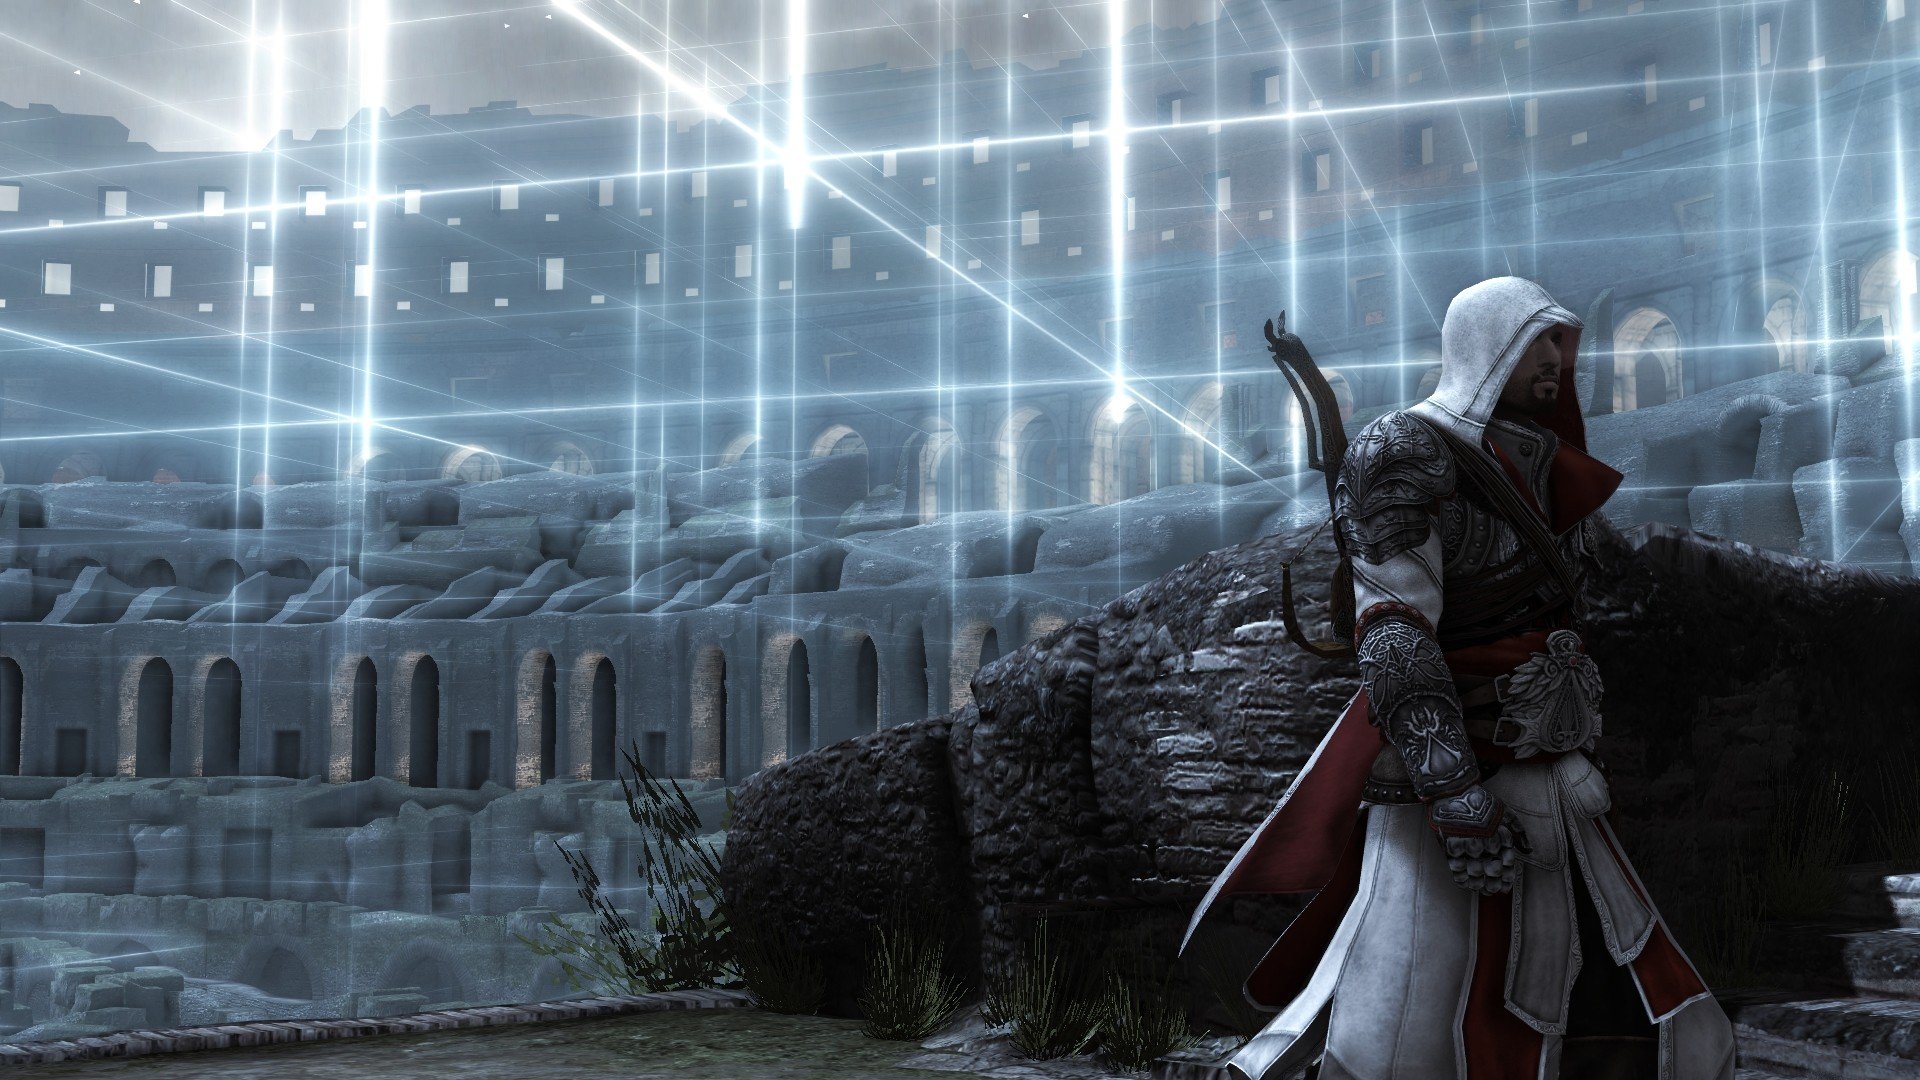 Assassin's Creed Эцио